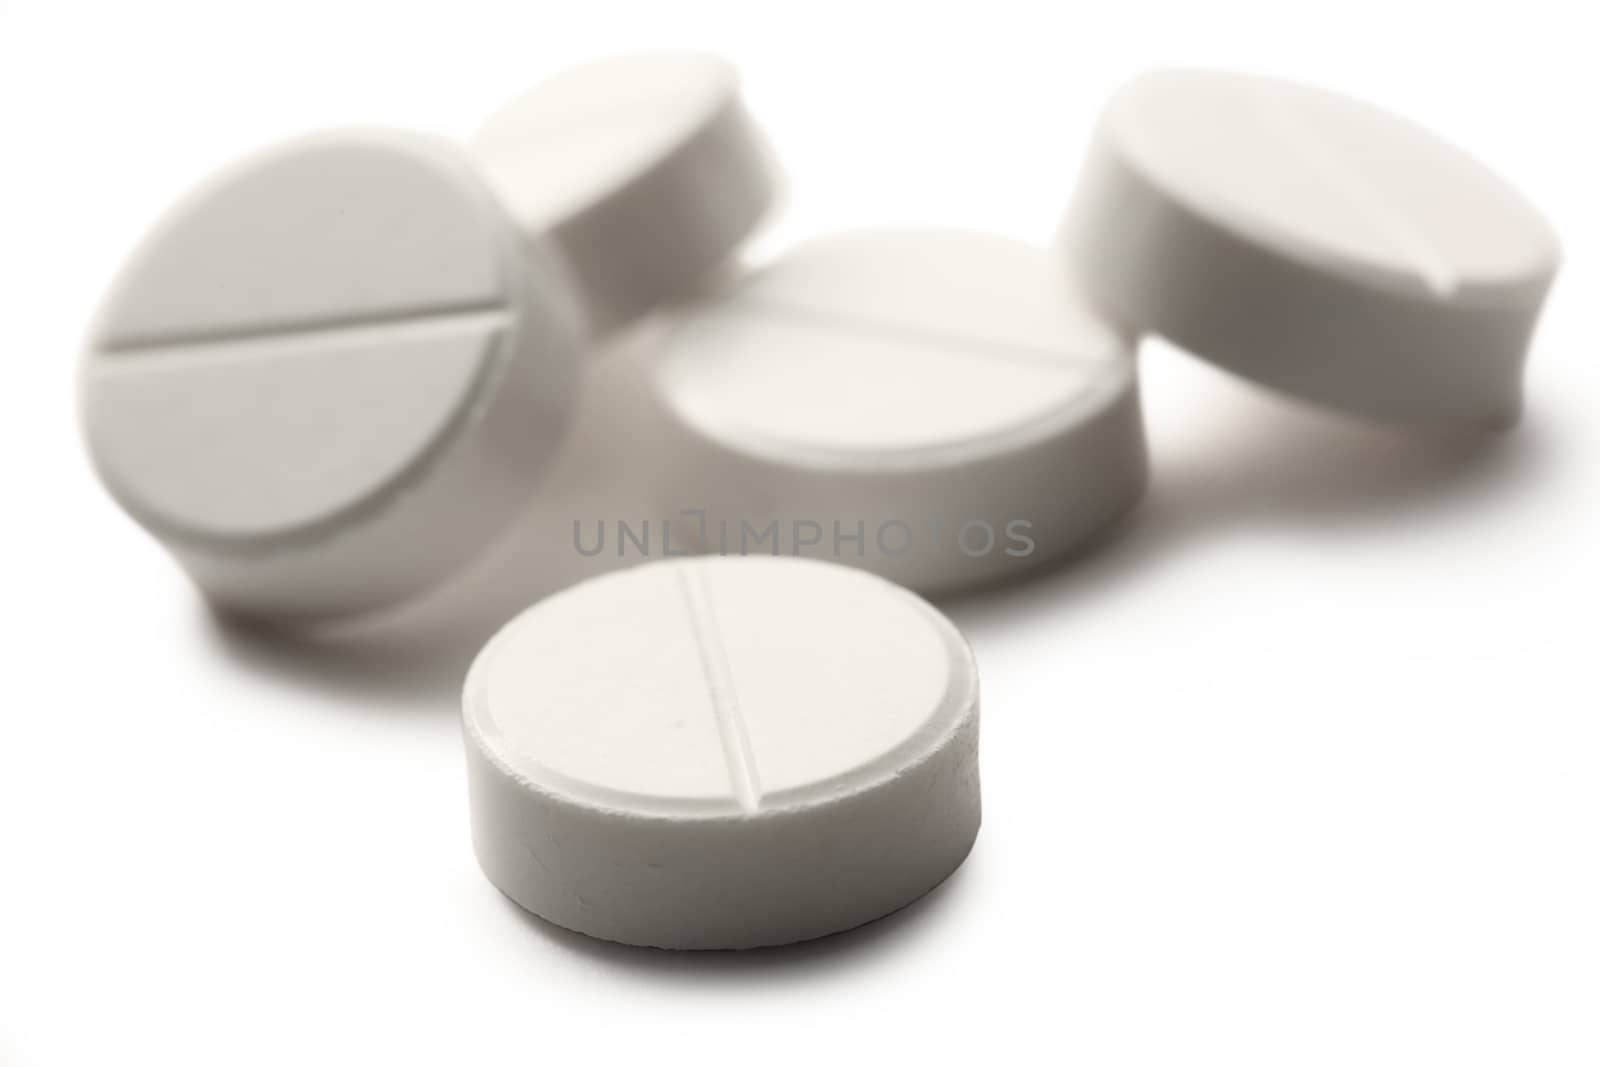 Aspirin pills on white background